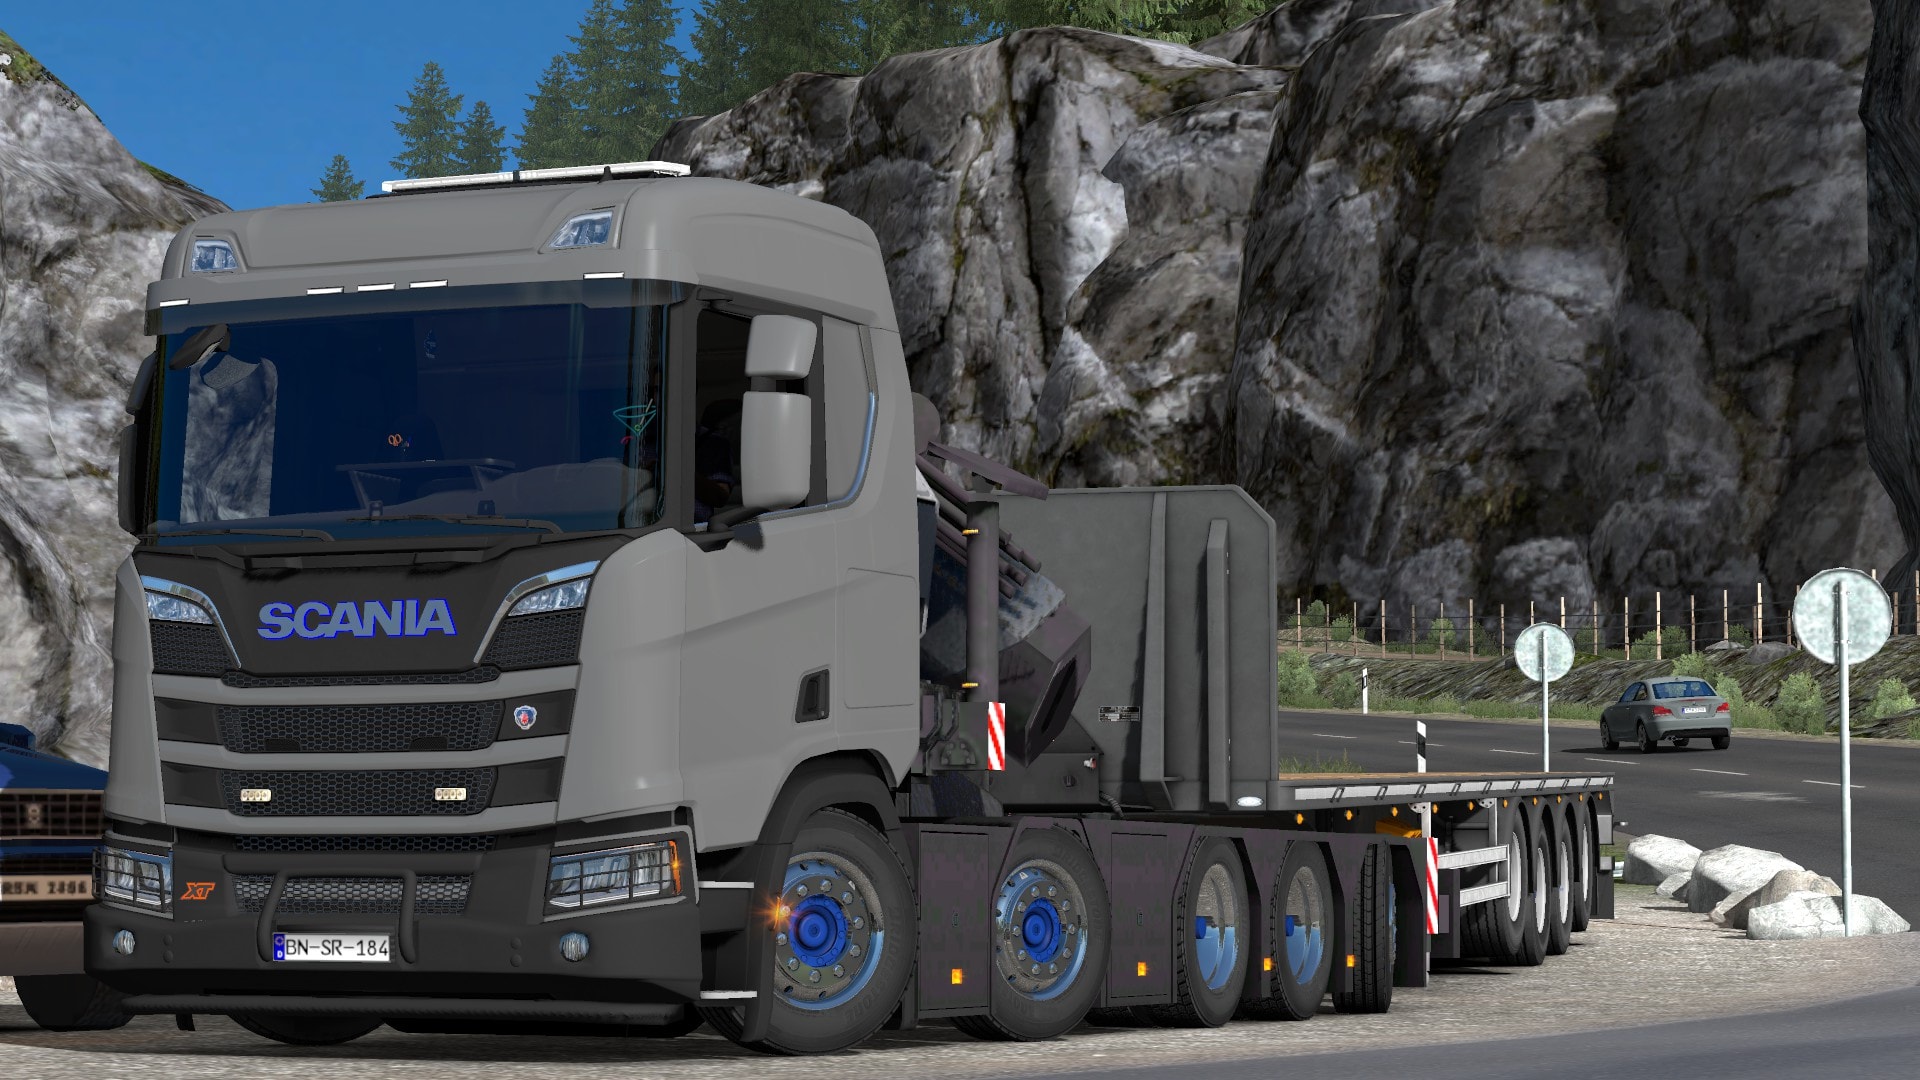 ETS2 Scania Truck Mods